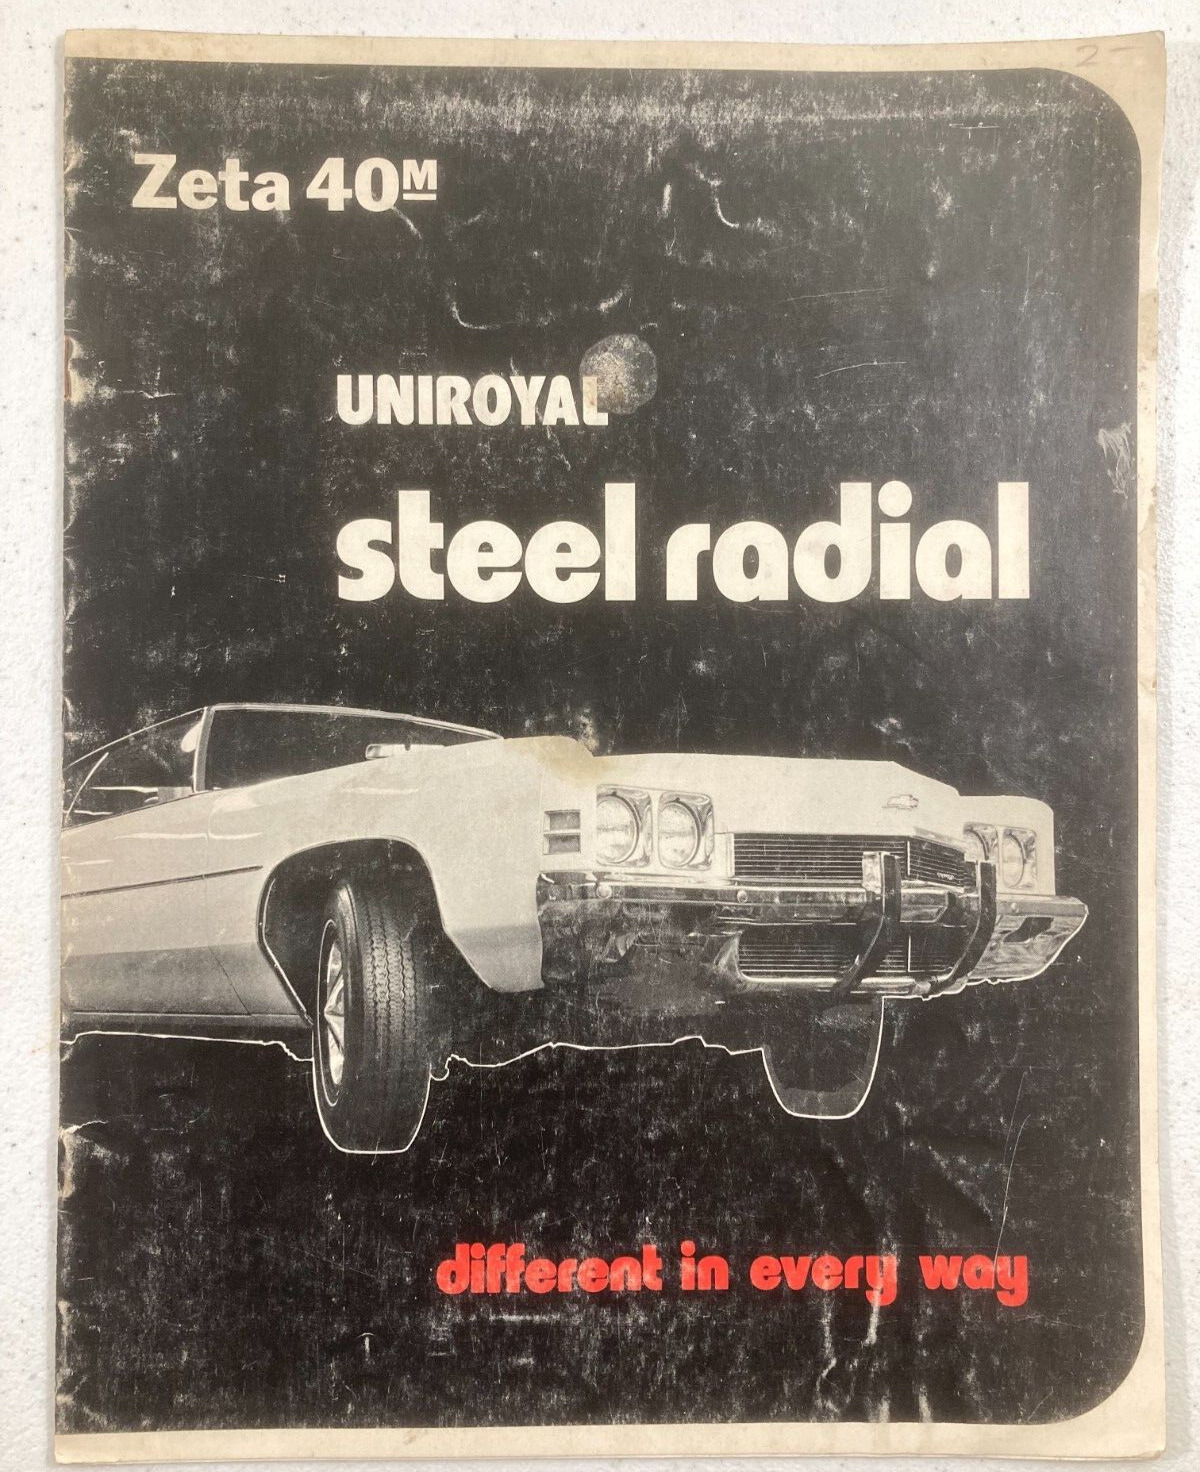 1970s vintage brochure, Zeta 40M Uniroyal Steel Radial Tires, 8 pages